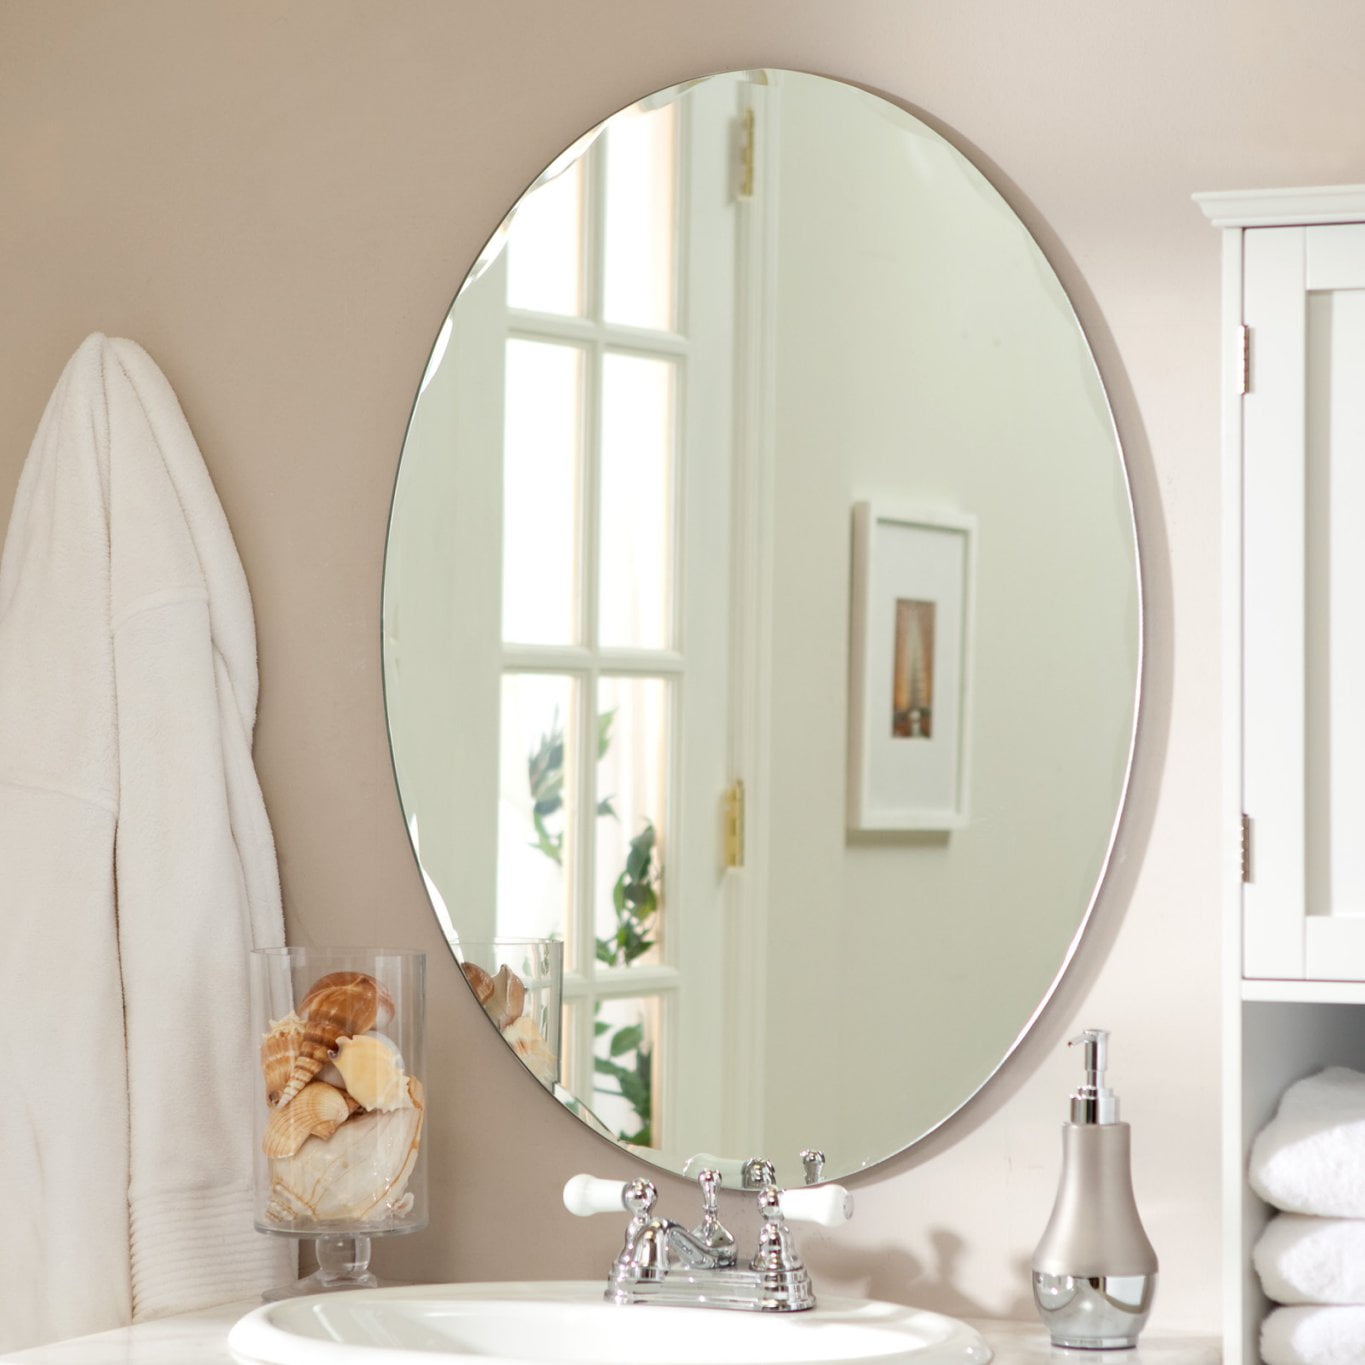 Medium 22 X 28 Oval Beveled Odelia, Bathroom Frameless Mirror Decor